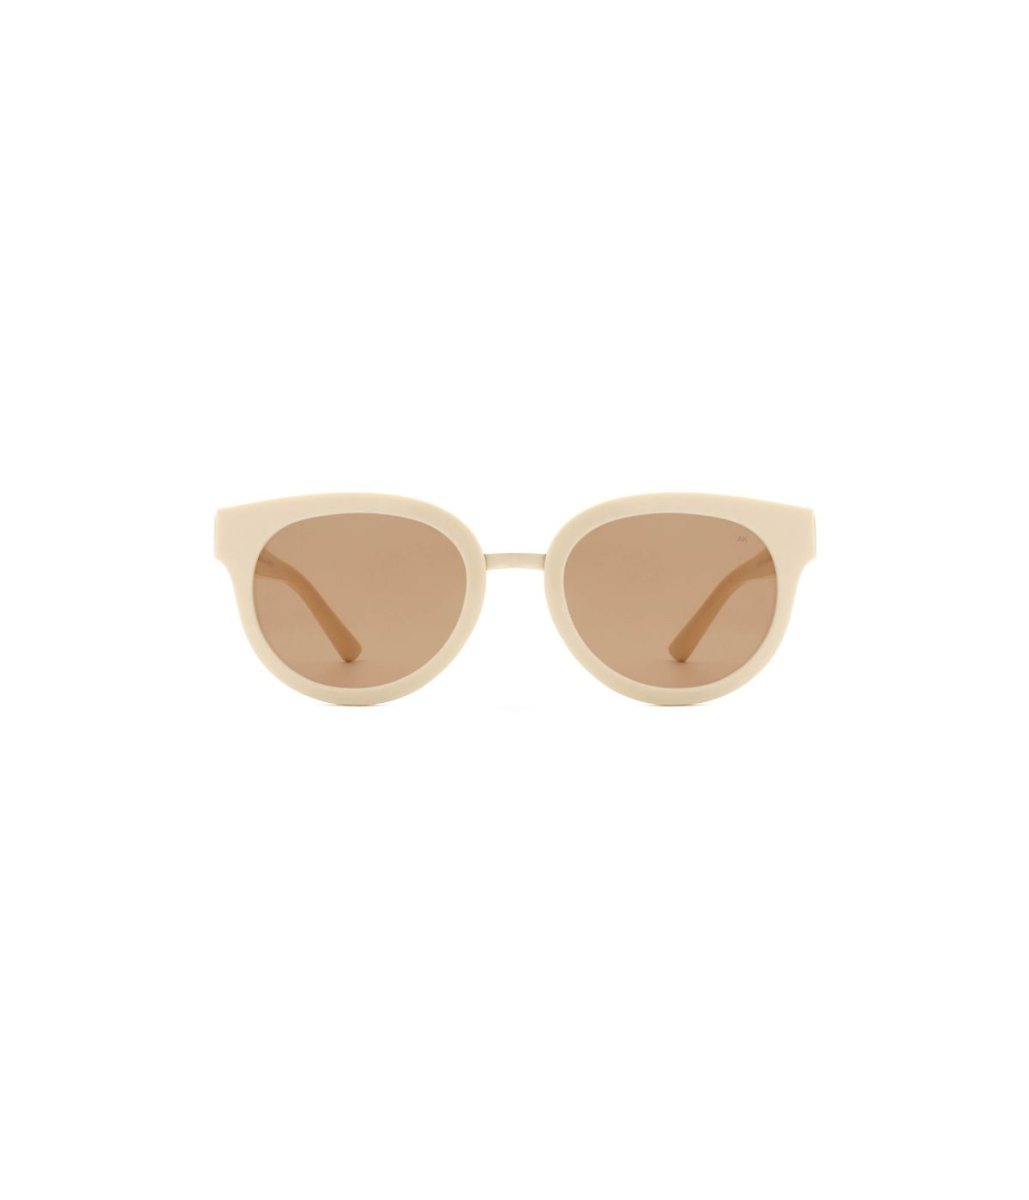 Sonnenbrille Jolie Cream - A.Kjaerbede - MALA - The Concept Store